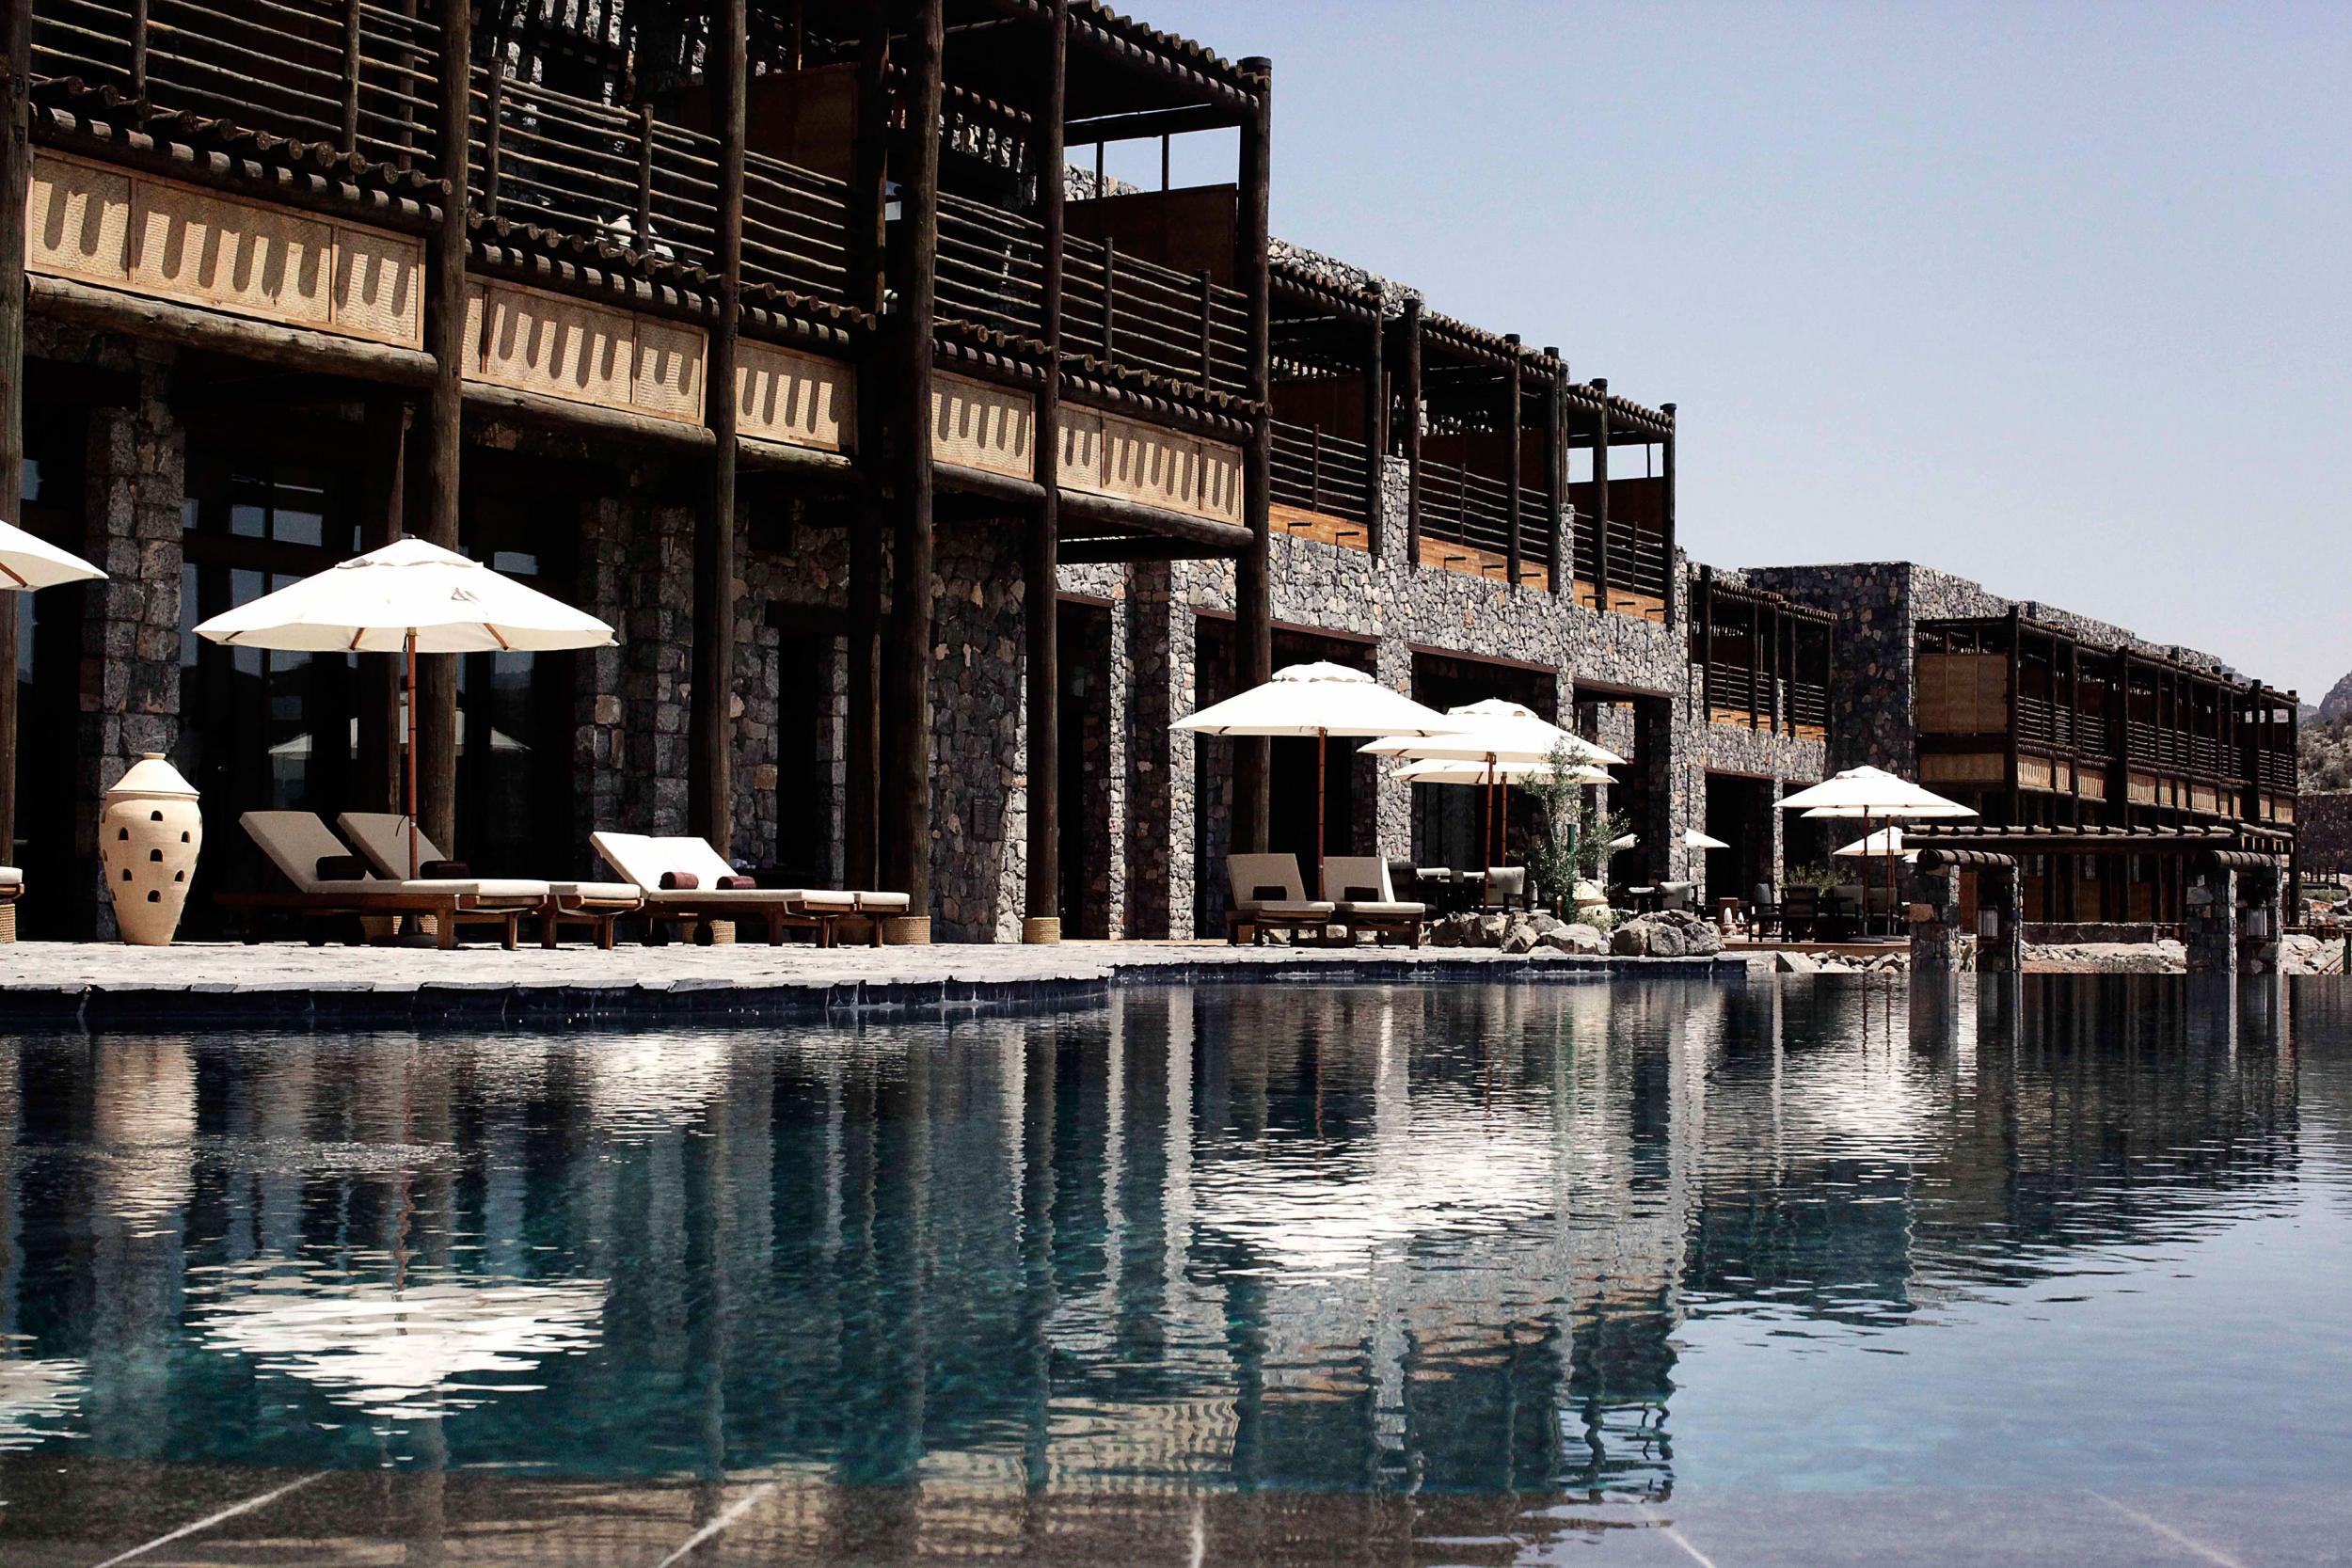 The pool at Oman’s Alila Jabal Akhdar has views of canyons and gorges